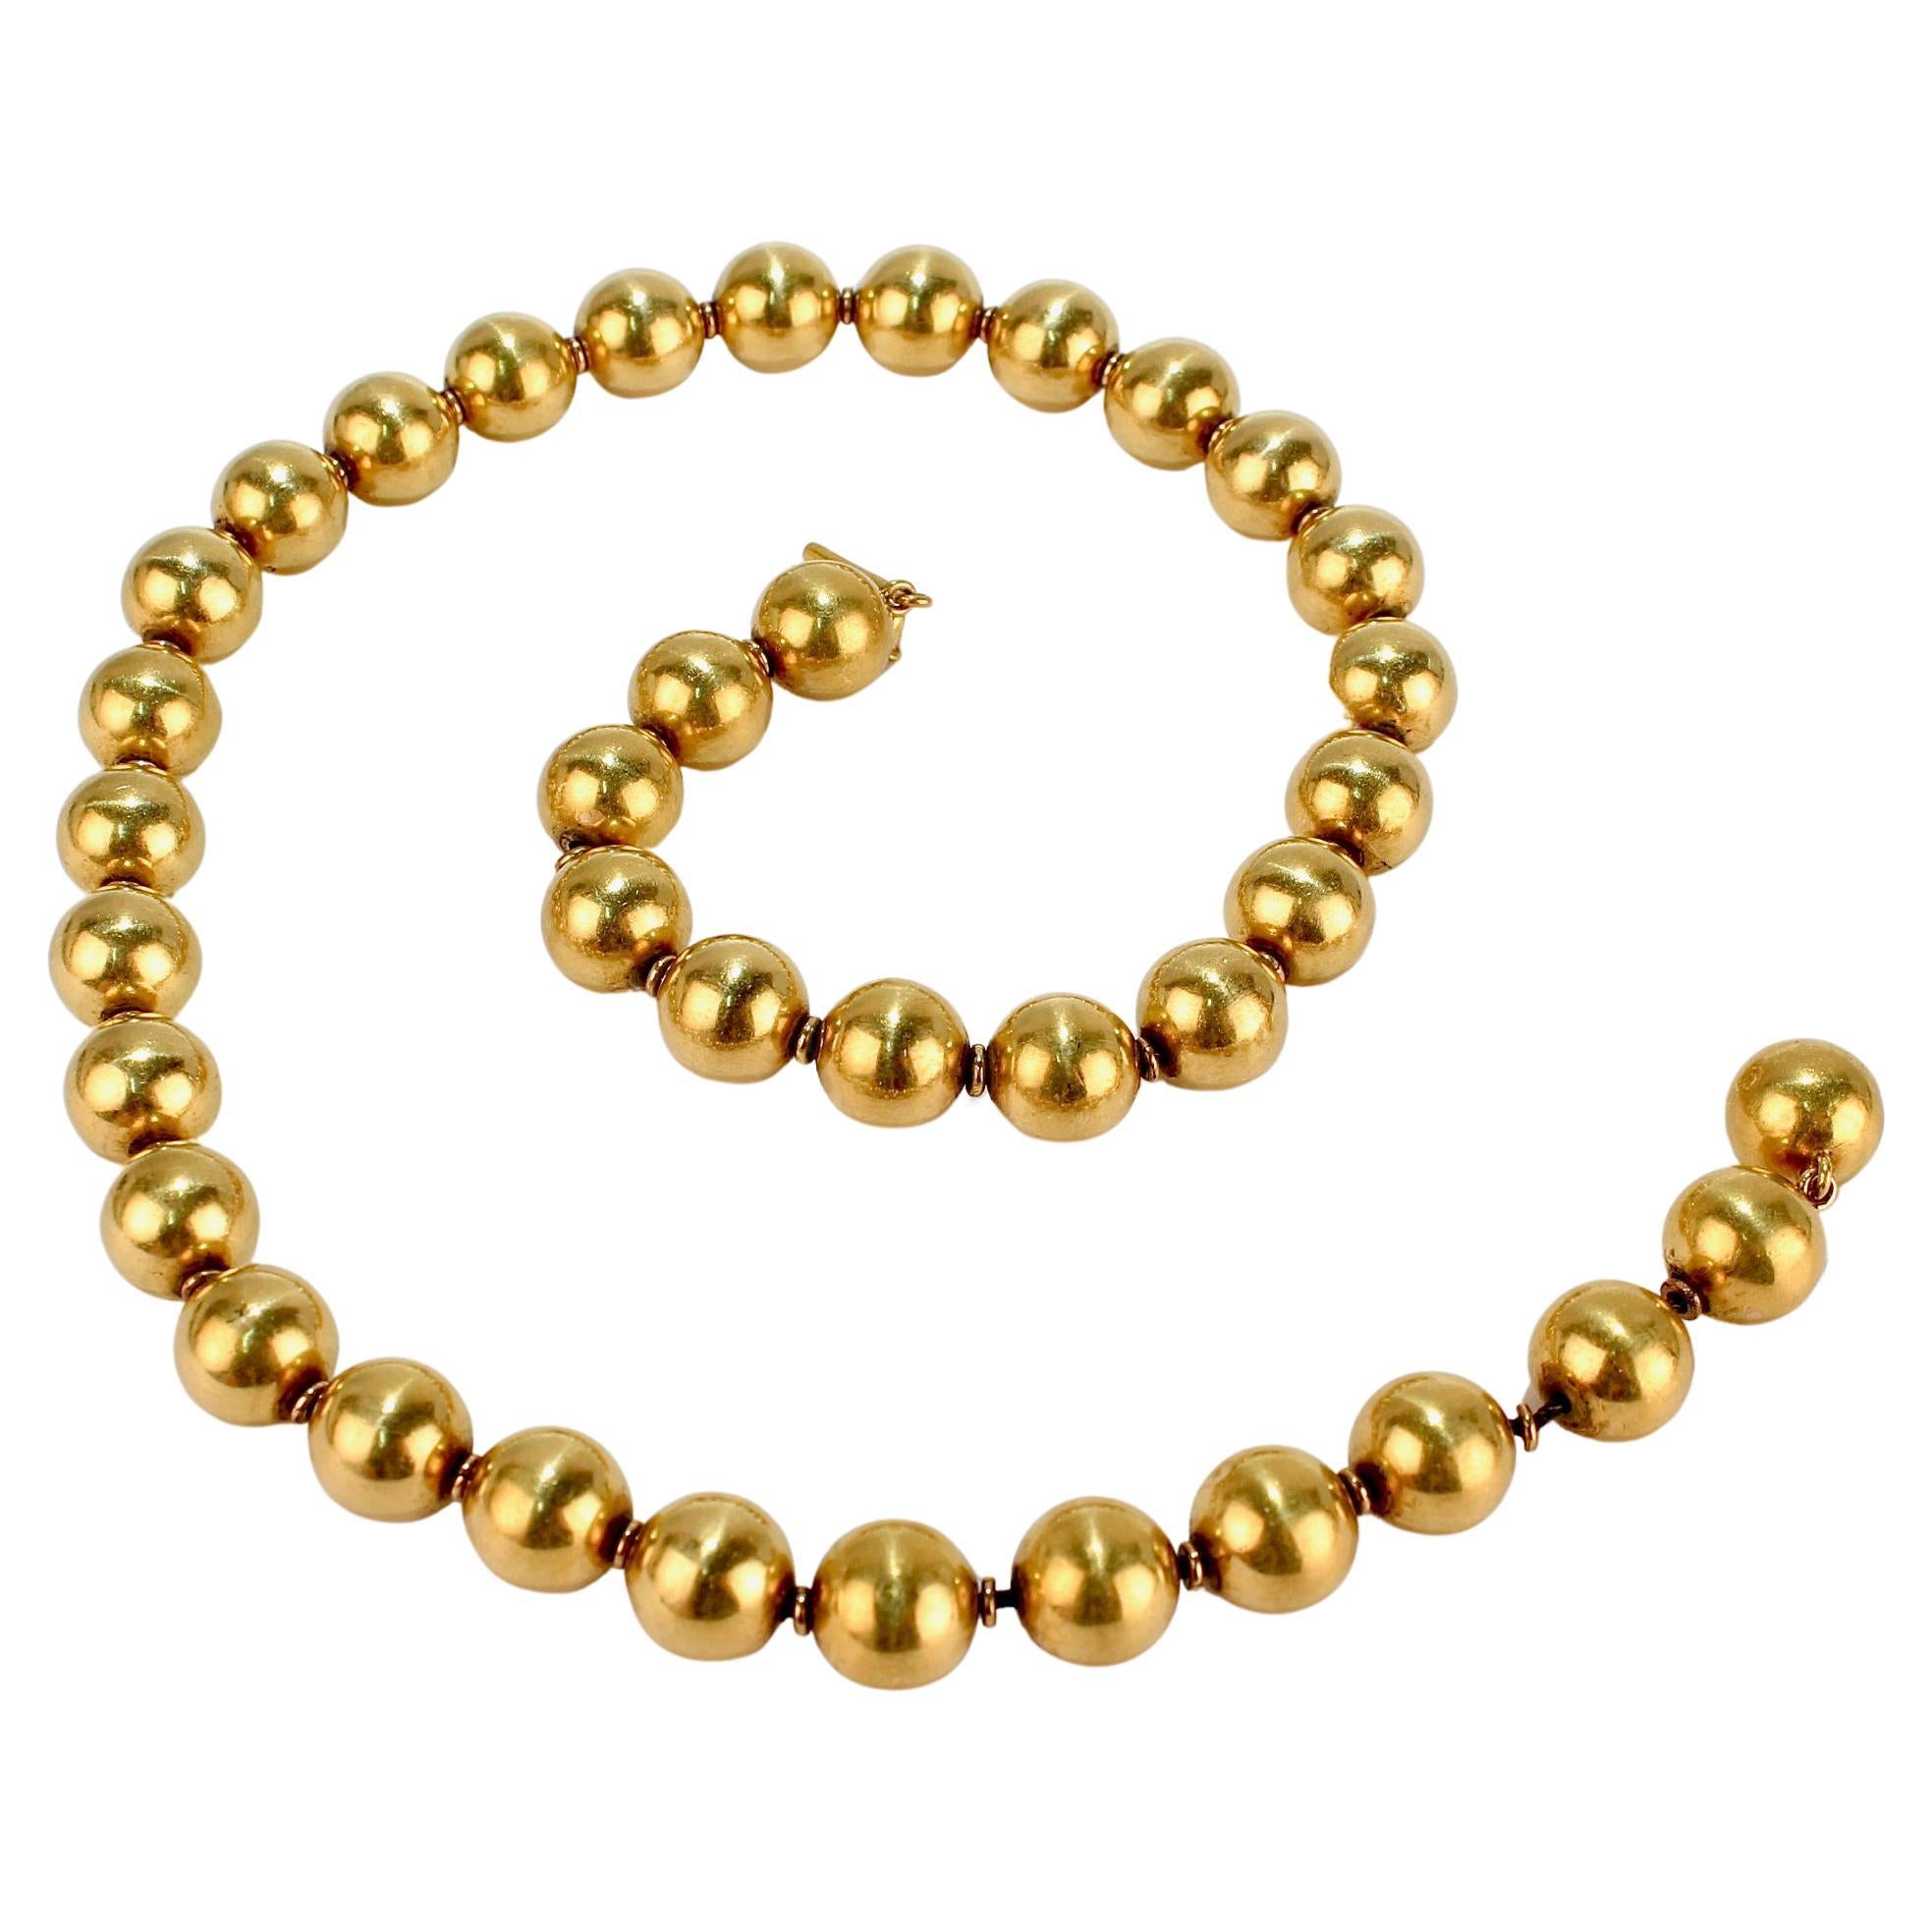 Antique Edwardian High Karat Gold Beaded Necklace